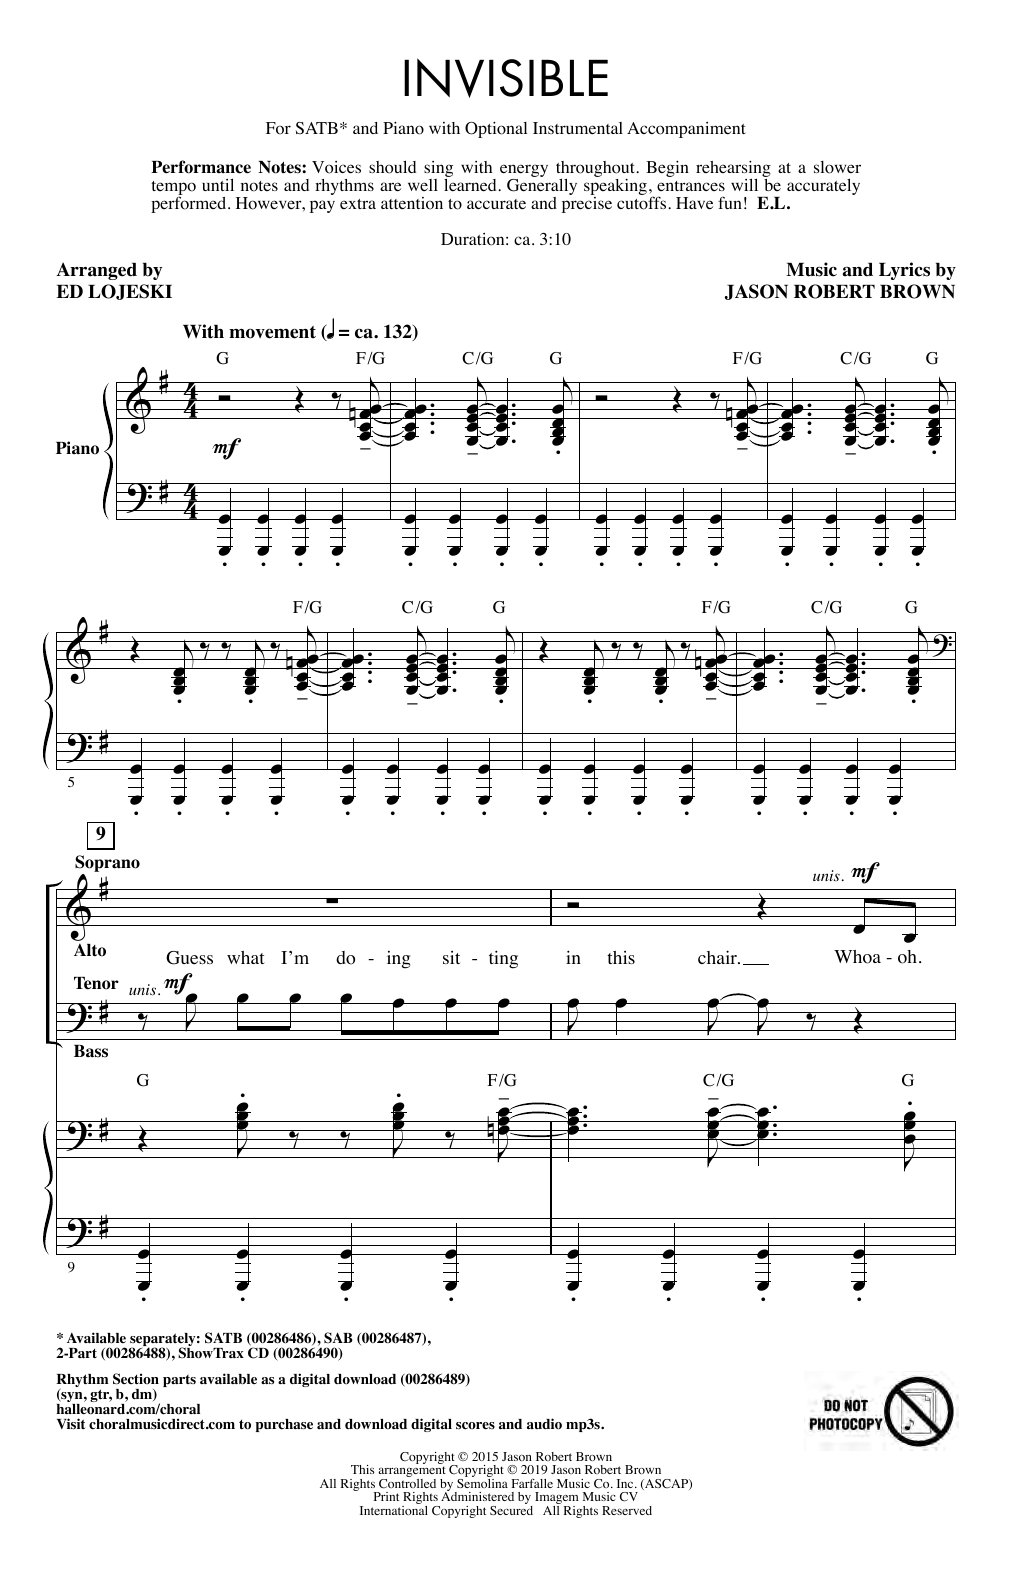 Jason Robert Brown Invisible (arr. Ed Lojeski) Sheet Music Notes & Chords for SATB Choir - Download or Print PDF